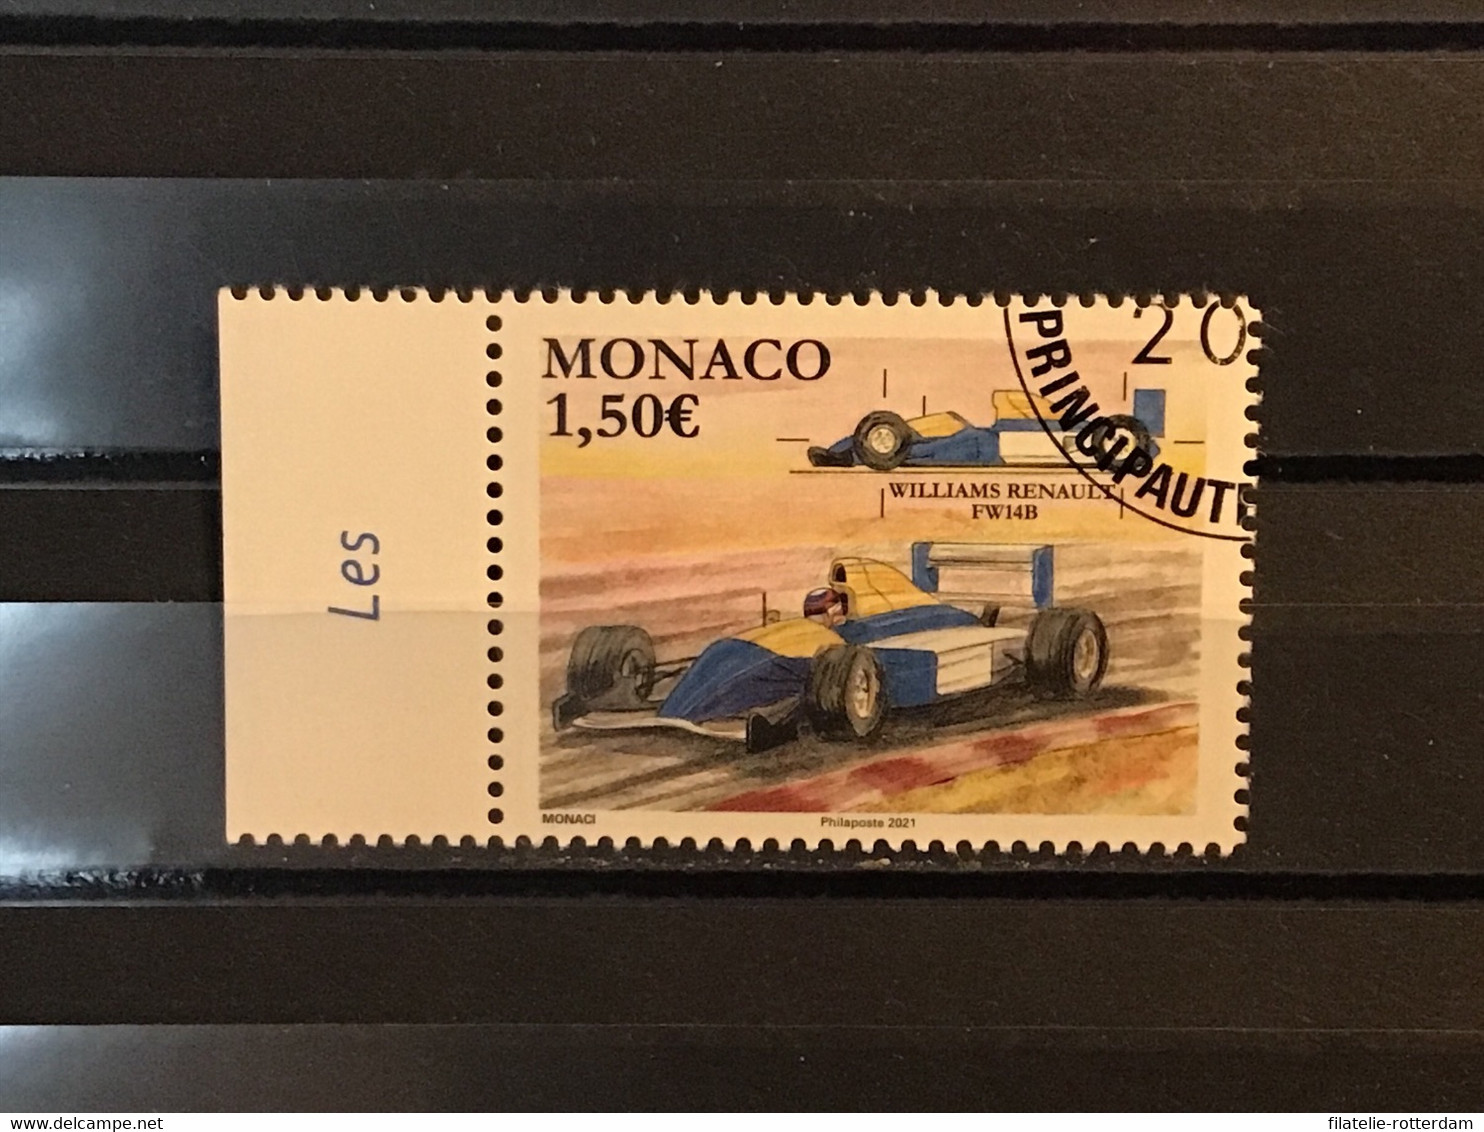 Monaco - Formule 1, Grand Prix Monaco (1.50) 2021 - Gebruikt